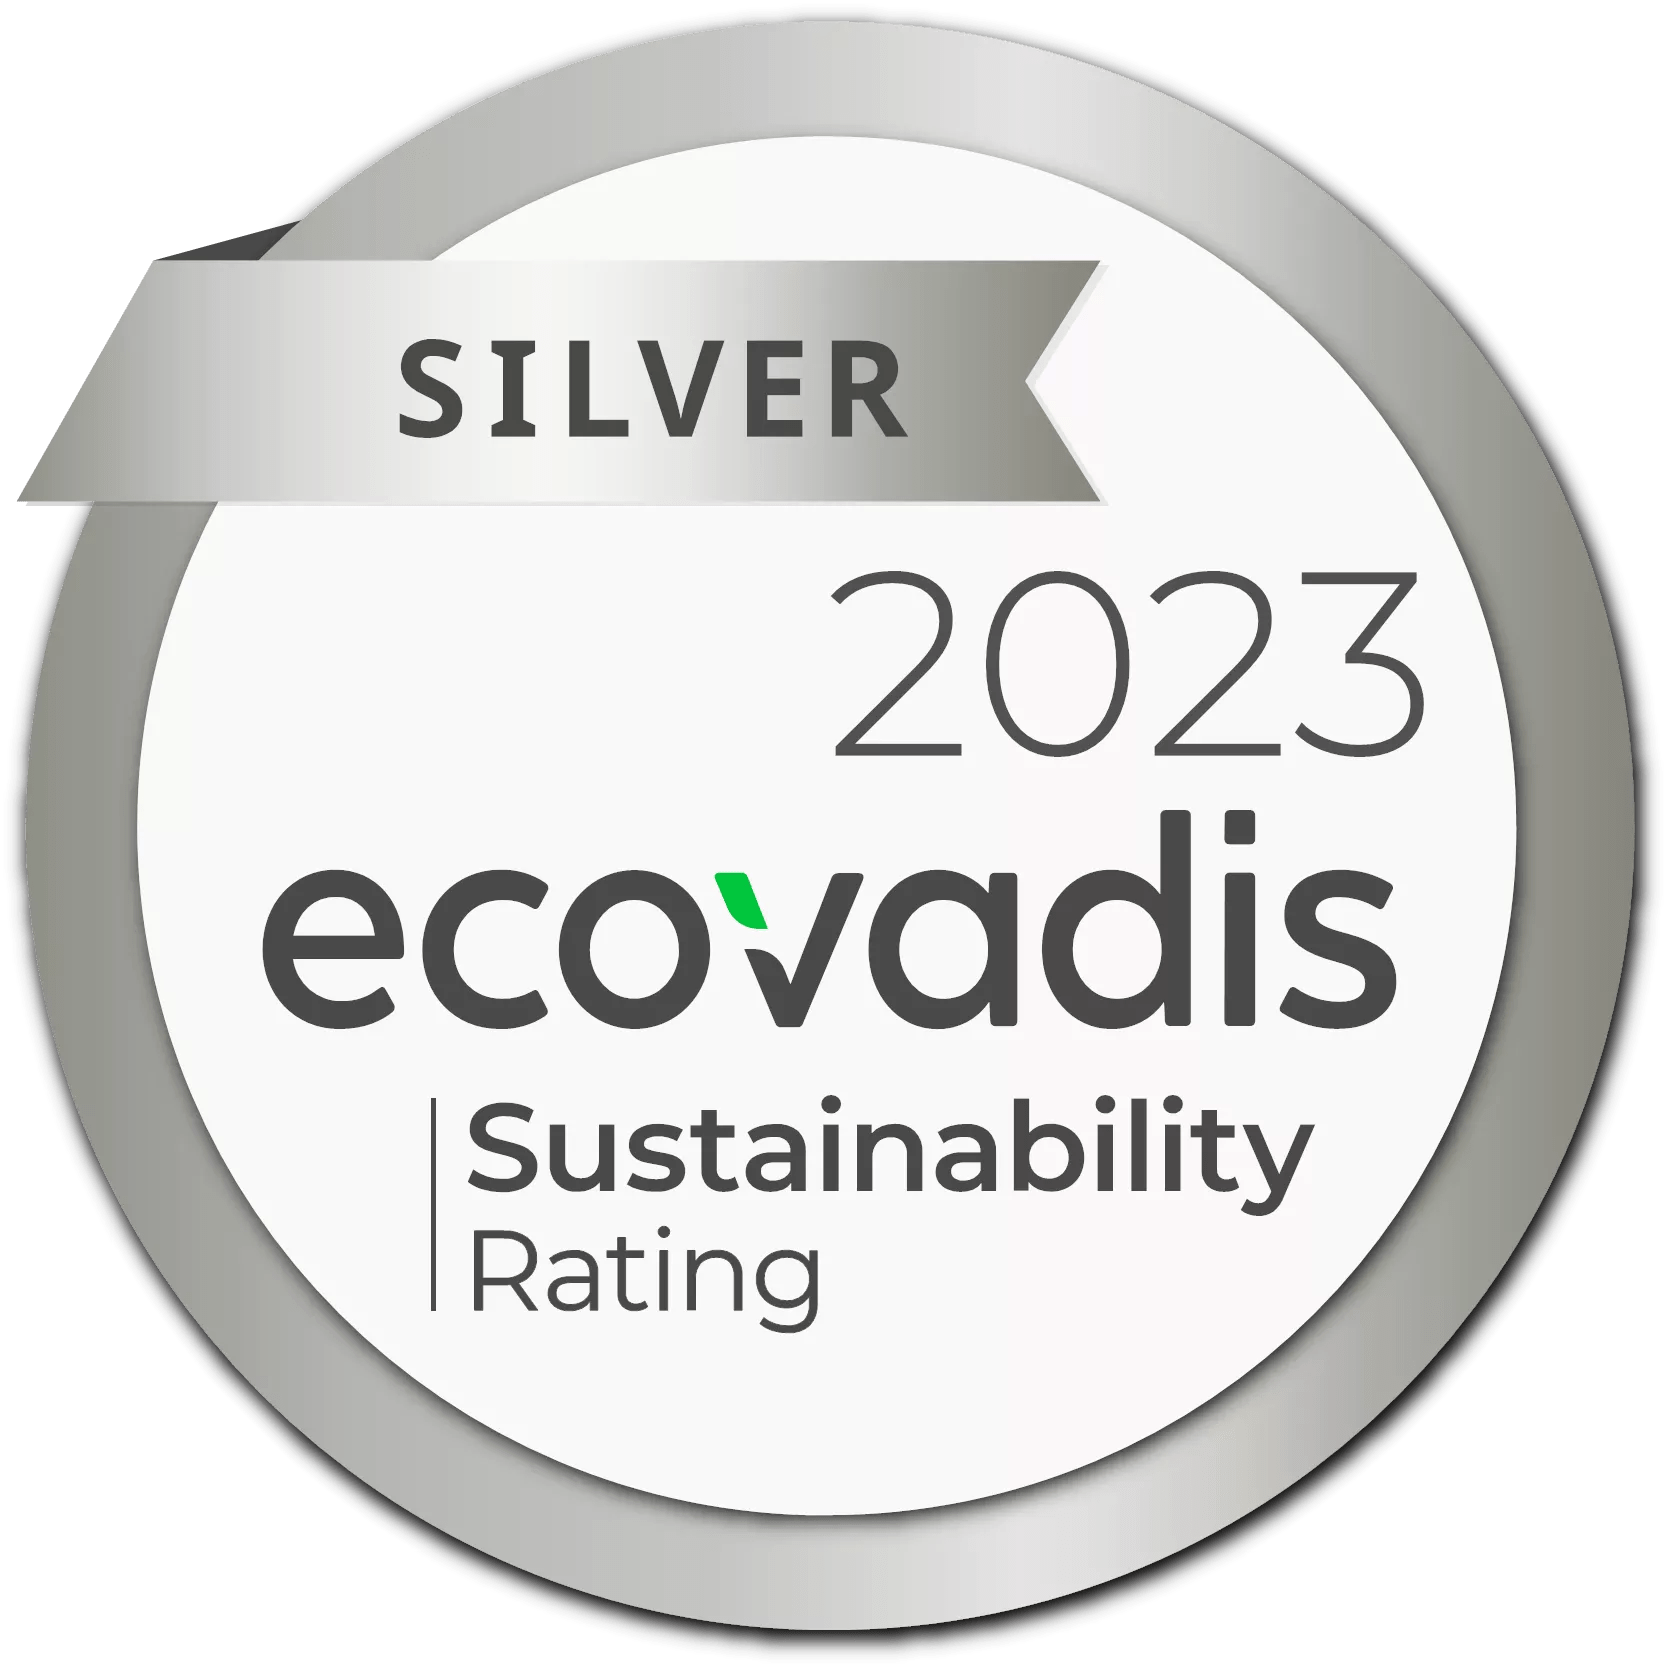 Ecovadis 2022 Bronze rating